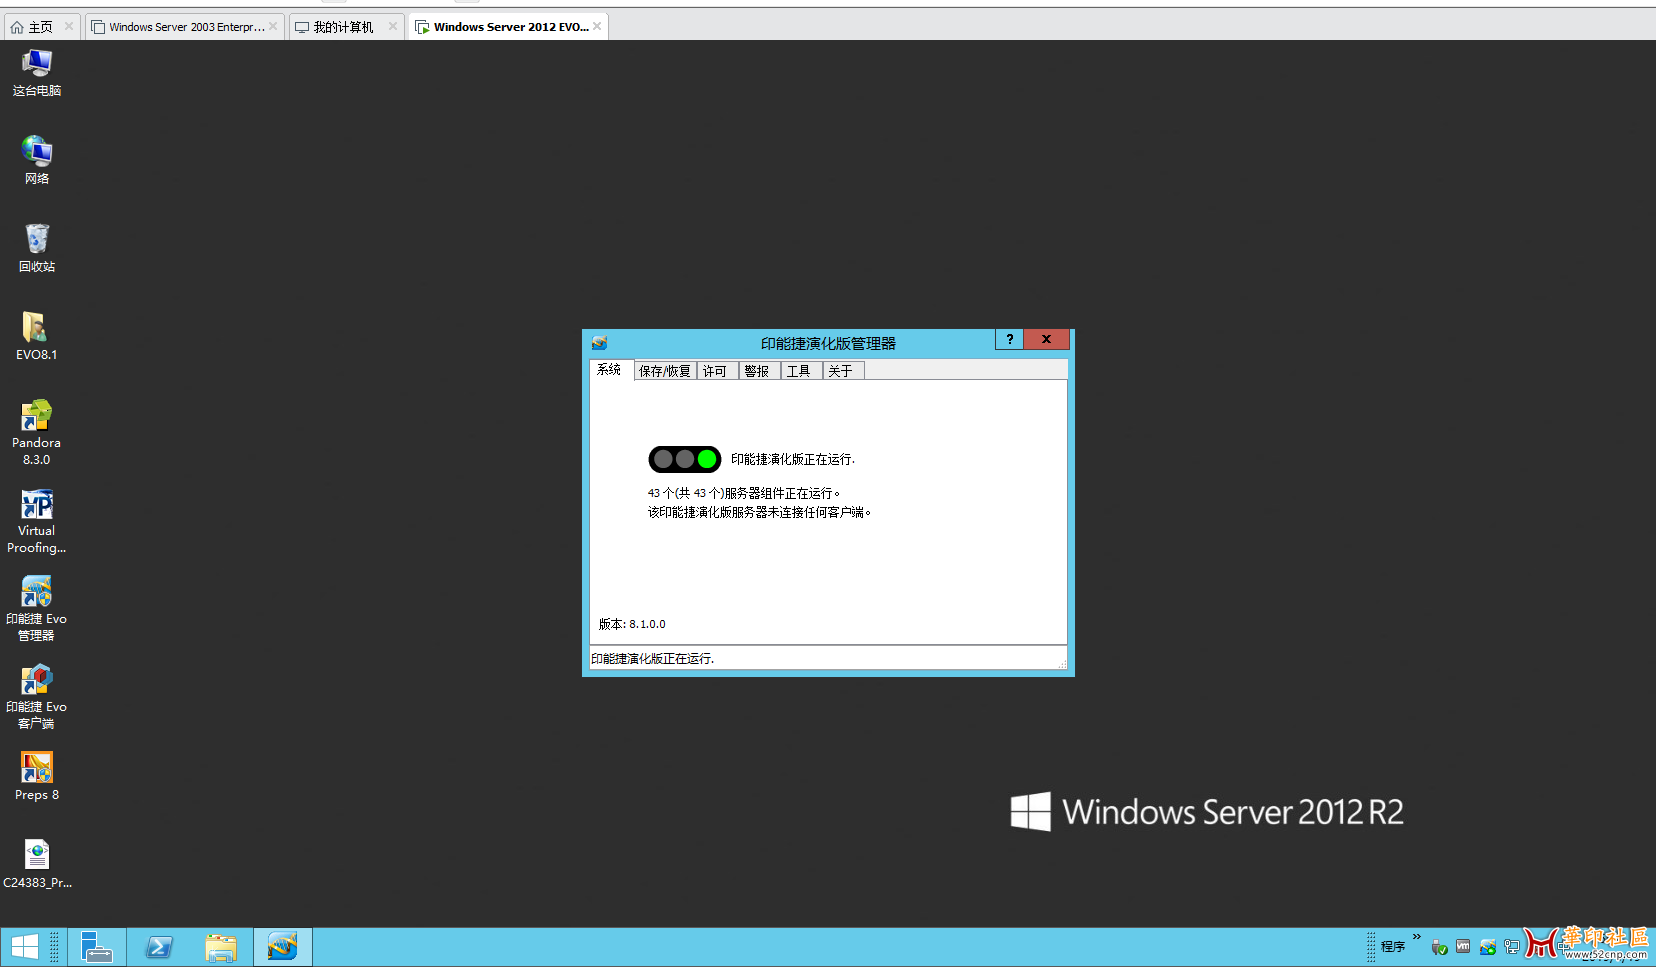 Win Server 2012 R2 EVO 8.1 VM 15{tag}(6)